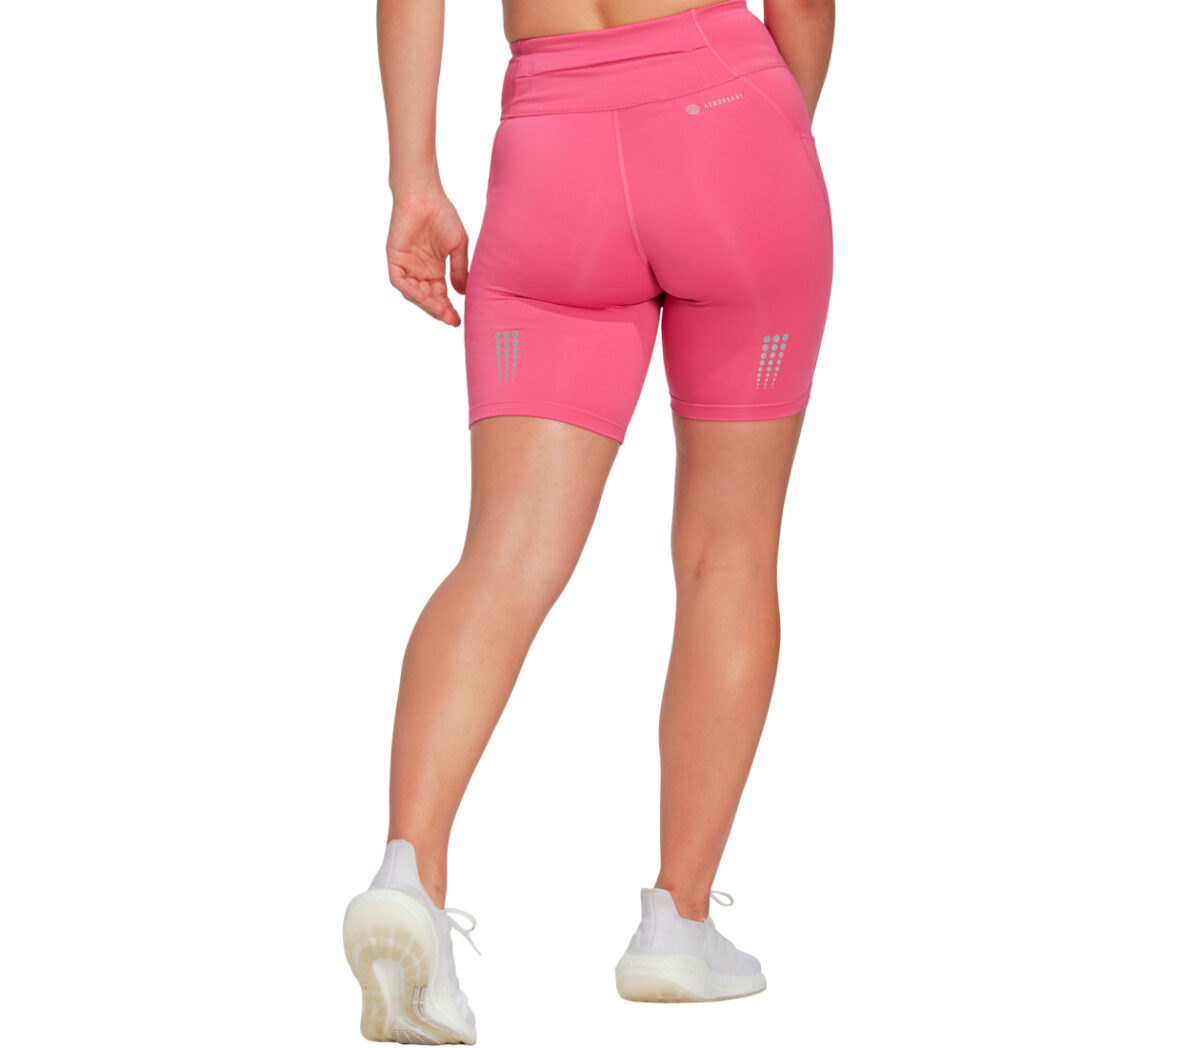 Retro Pantaloncino adidas daily run 5 inch donna rosa